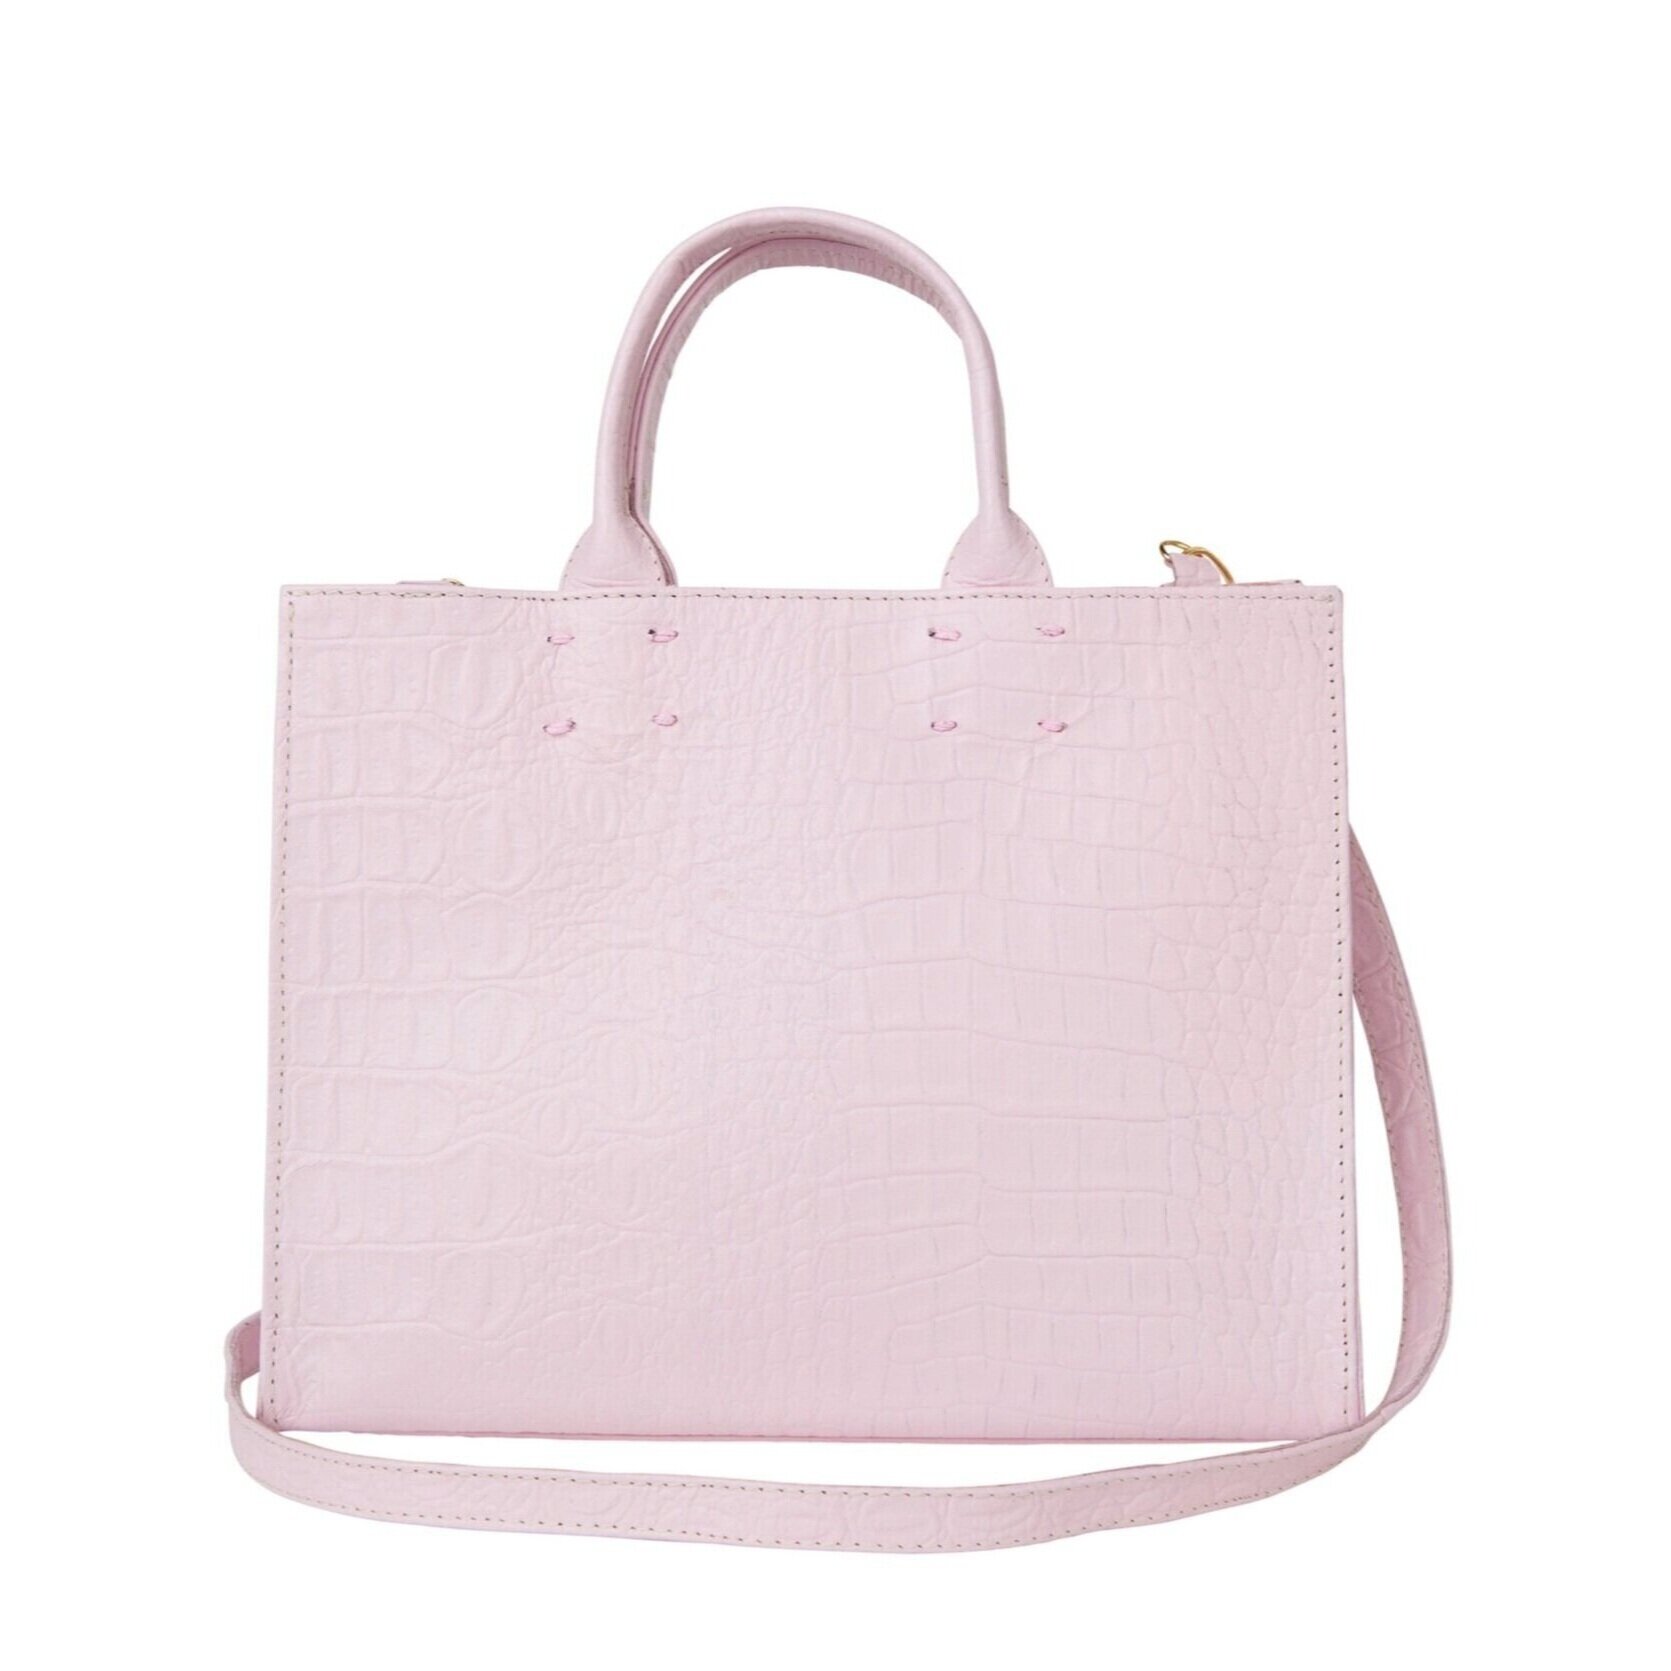 Bebe Sophia Small Crossbody Quilted Handbag Chain Purse Shoulder Bag Blush  Pink | eBay